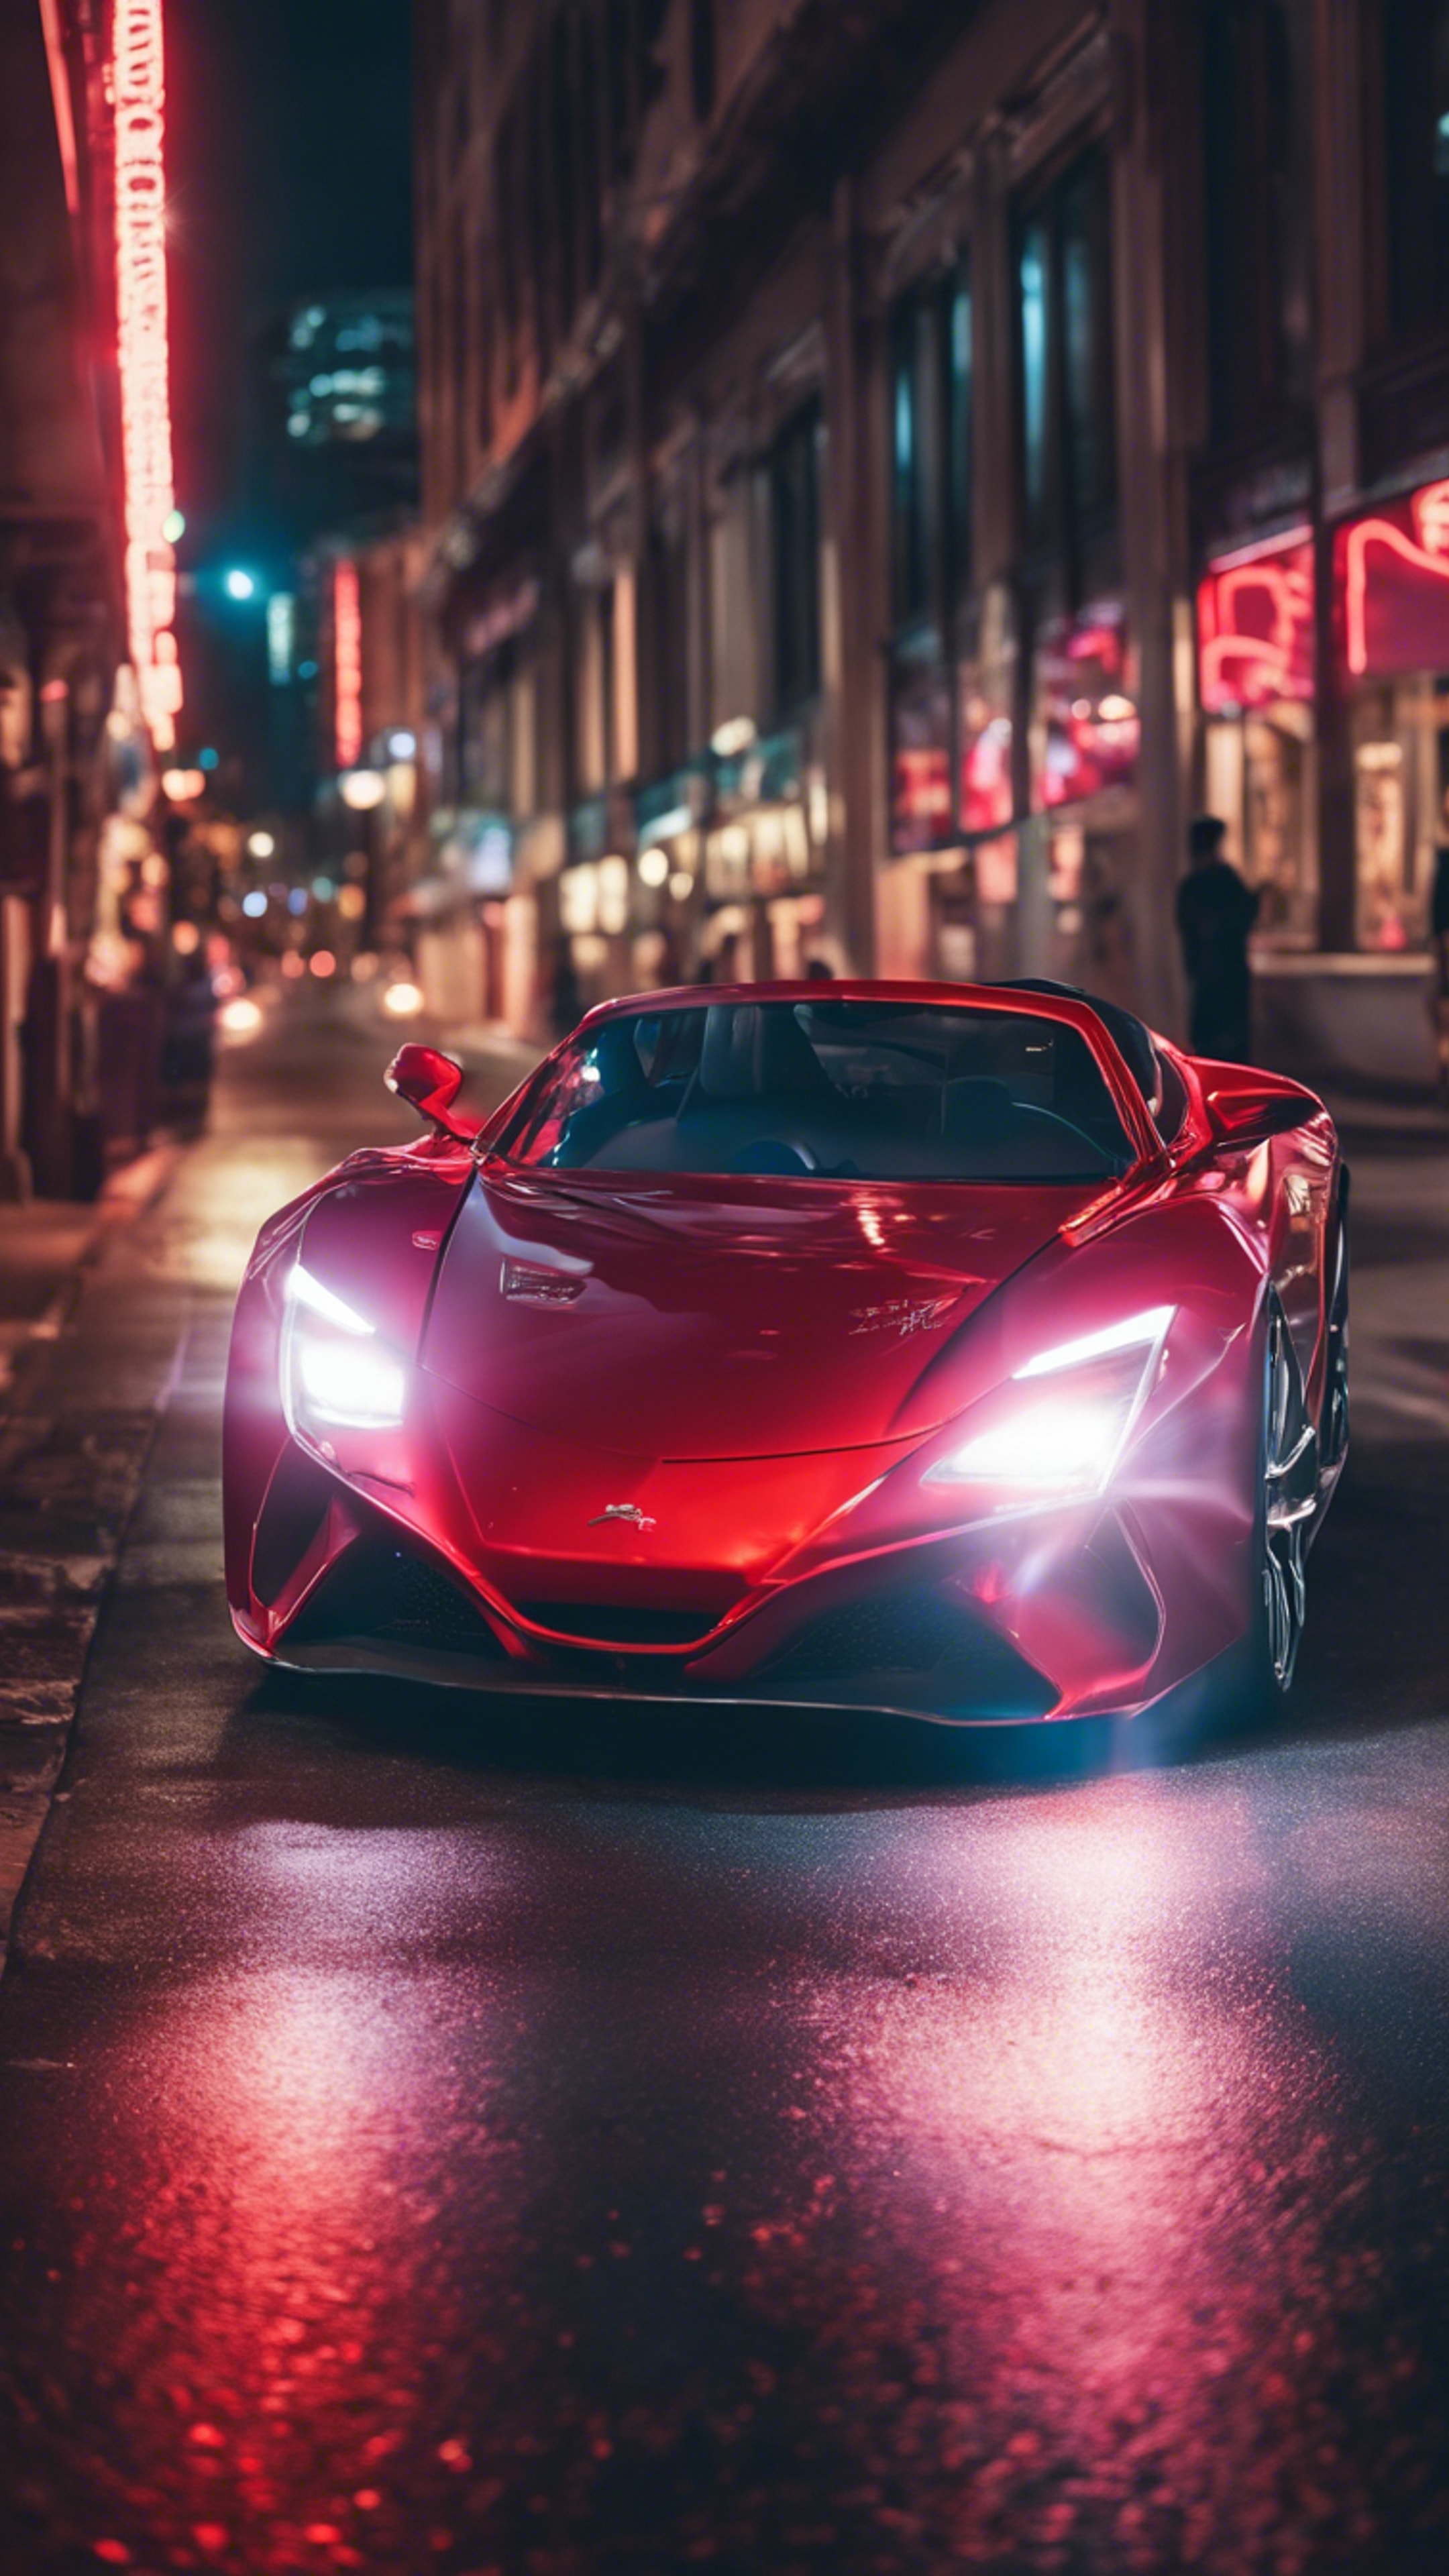 A sleek, cool red neon sports car zipping along a nighttime city street. Wallpaper[c8ae8bc93cf04b2eb441]